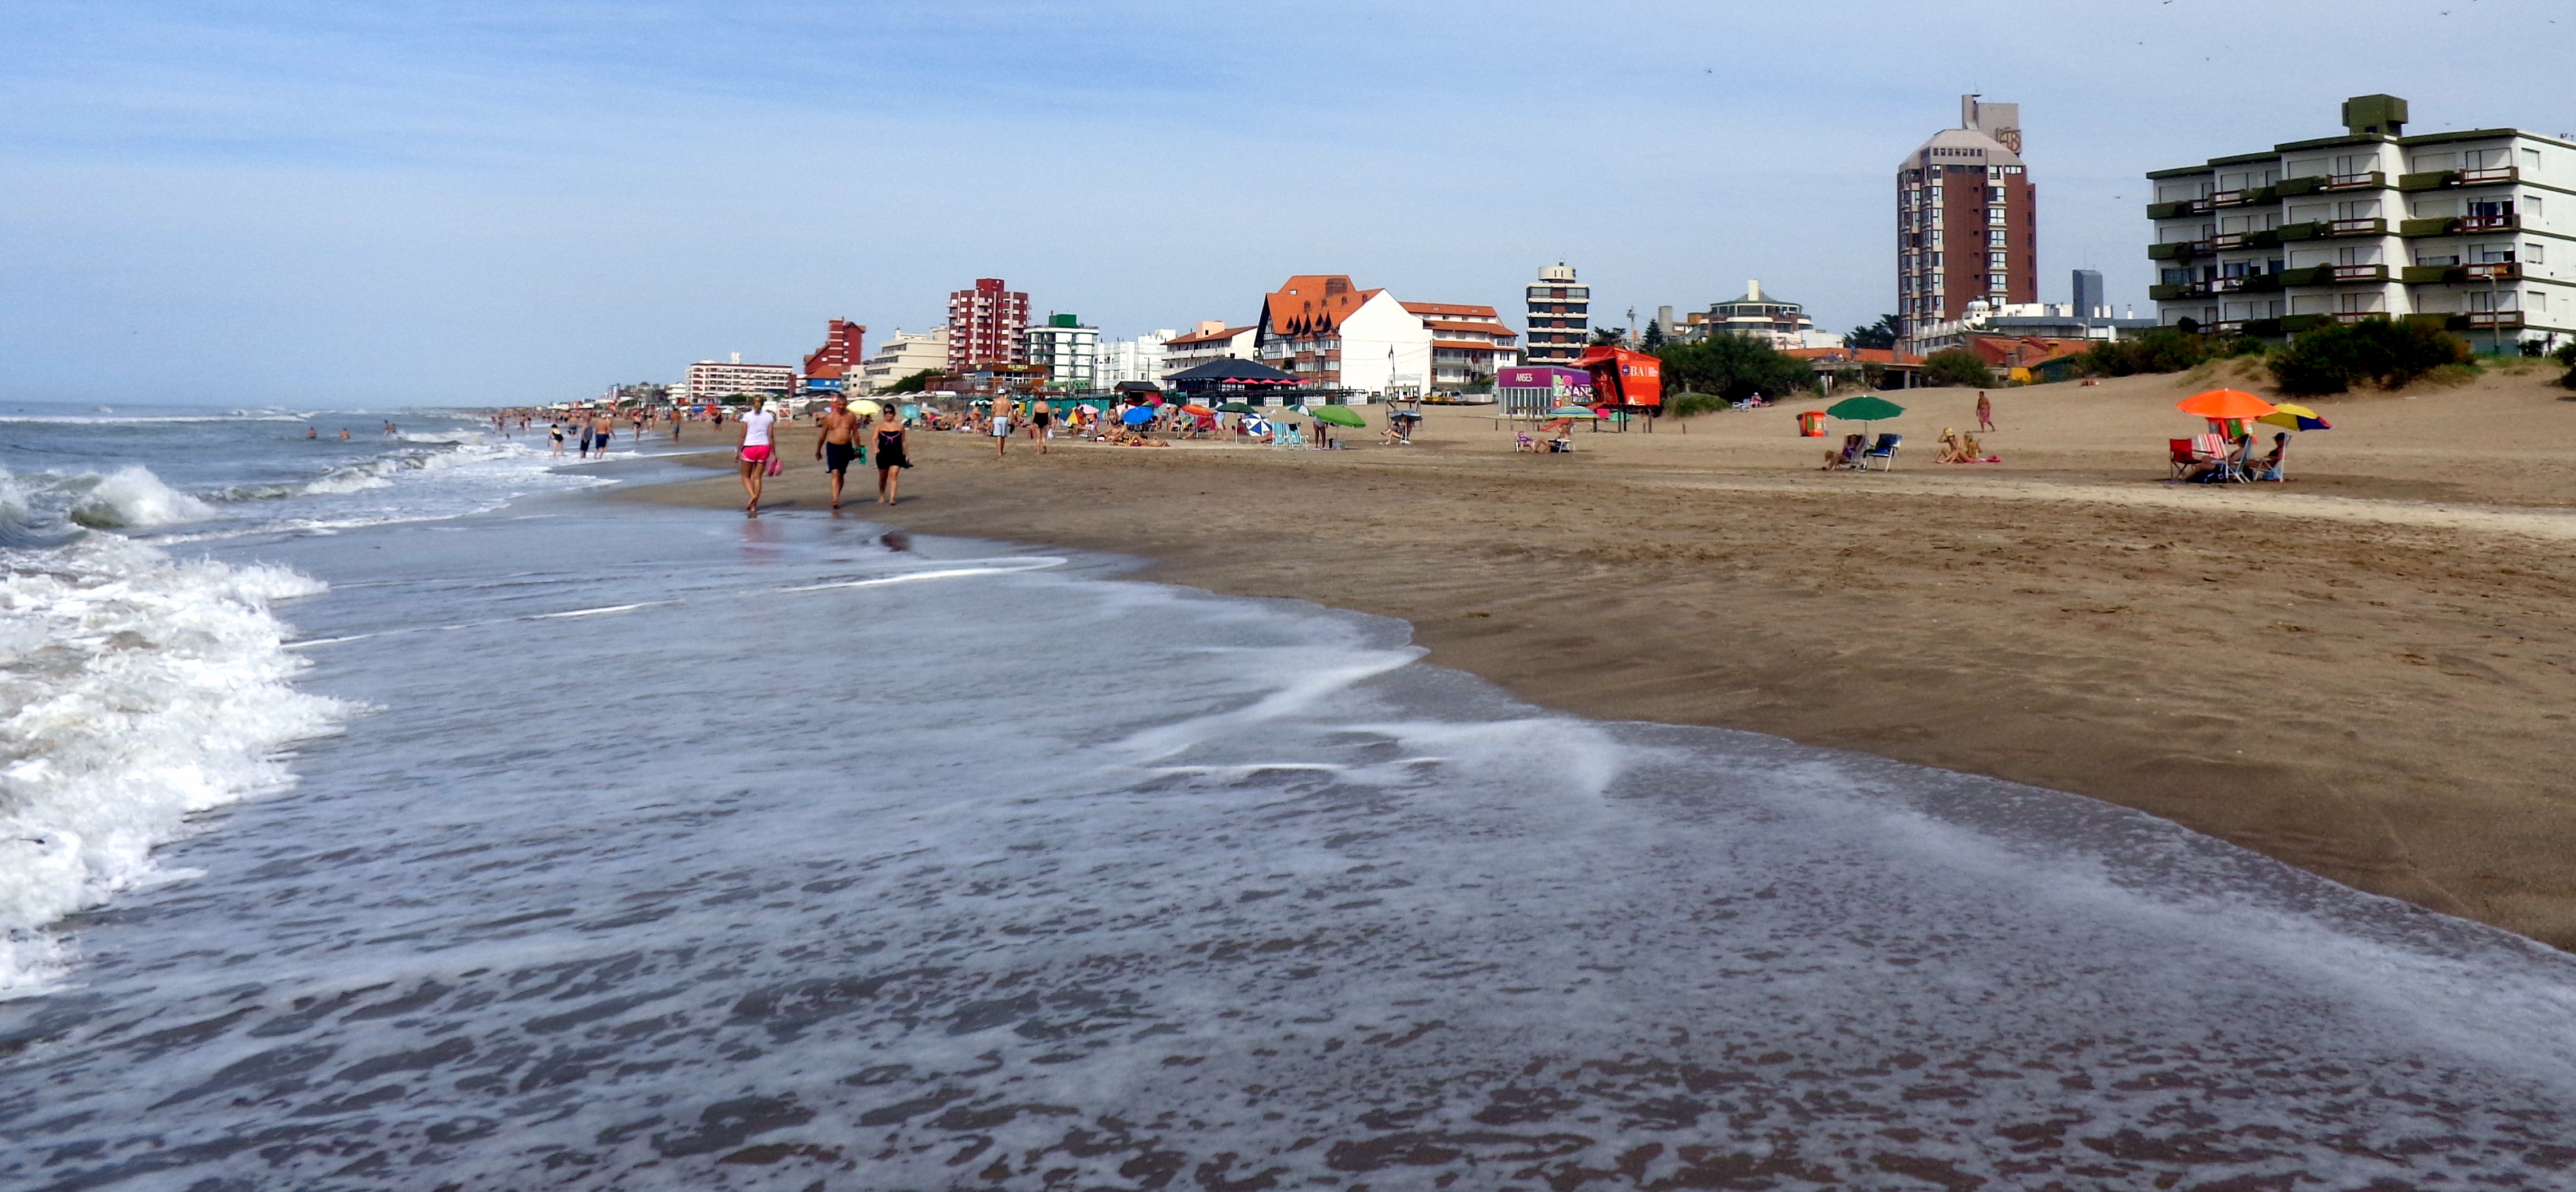 File:Playa el Supi.jpg - Wikimedia Commons